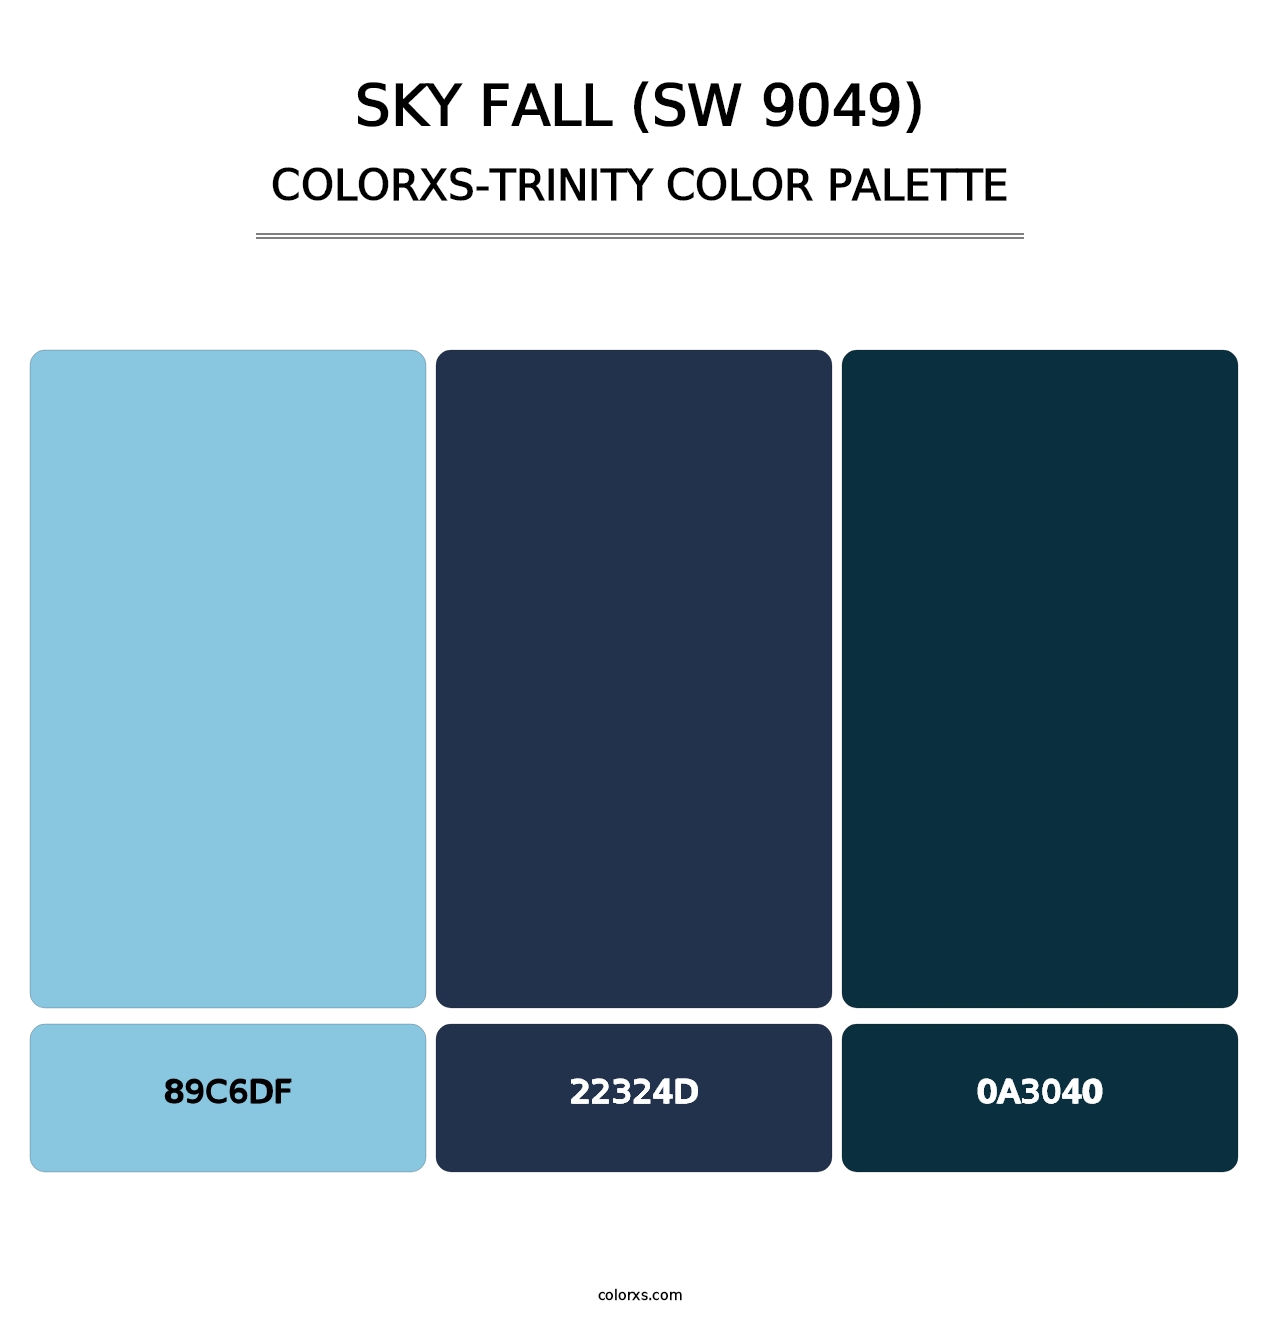 Sky Fall (SW 9049) - Colorxs Trinity Palette